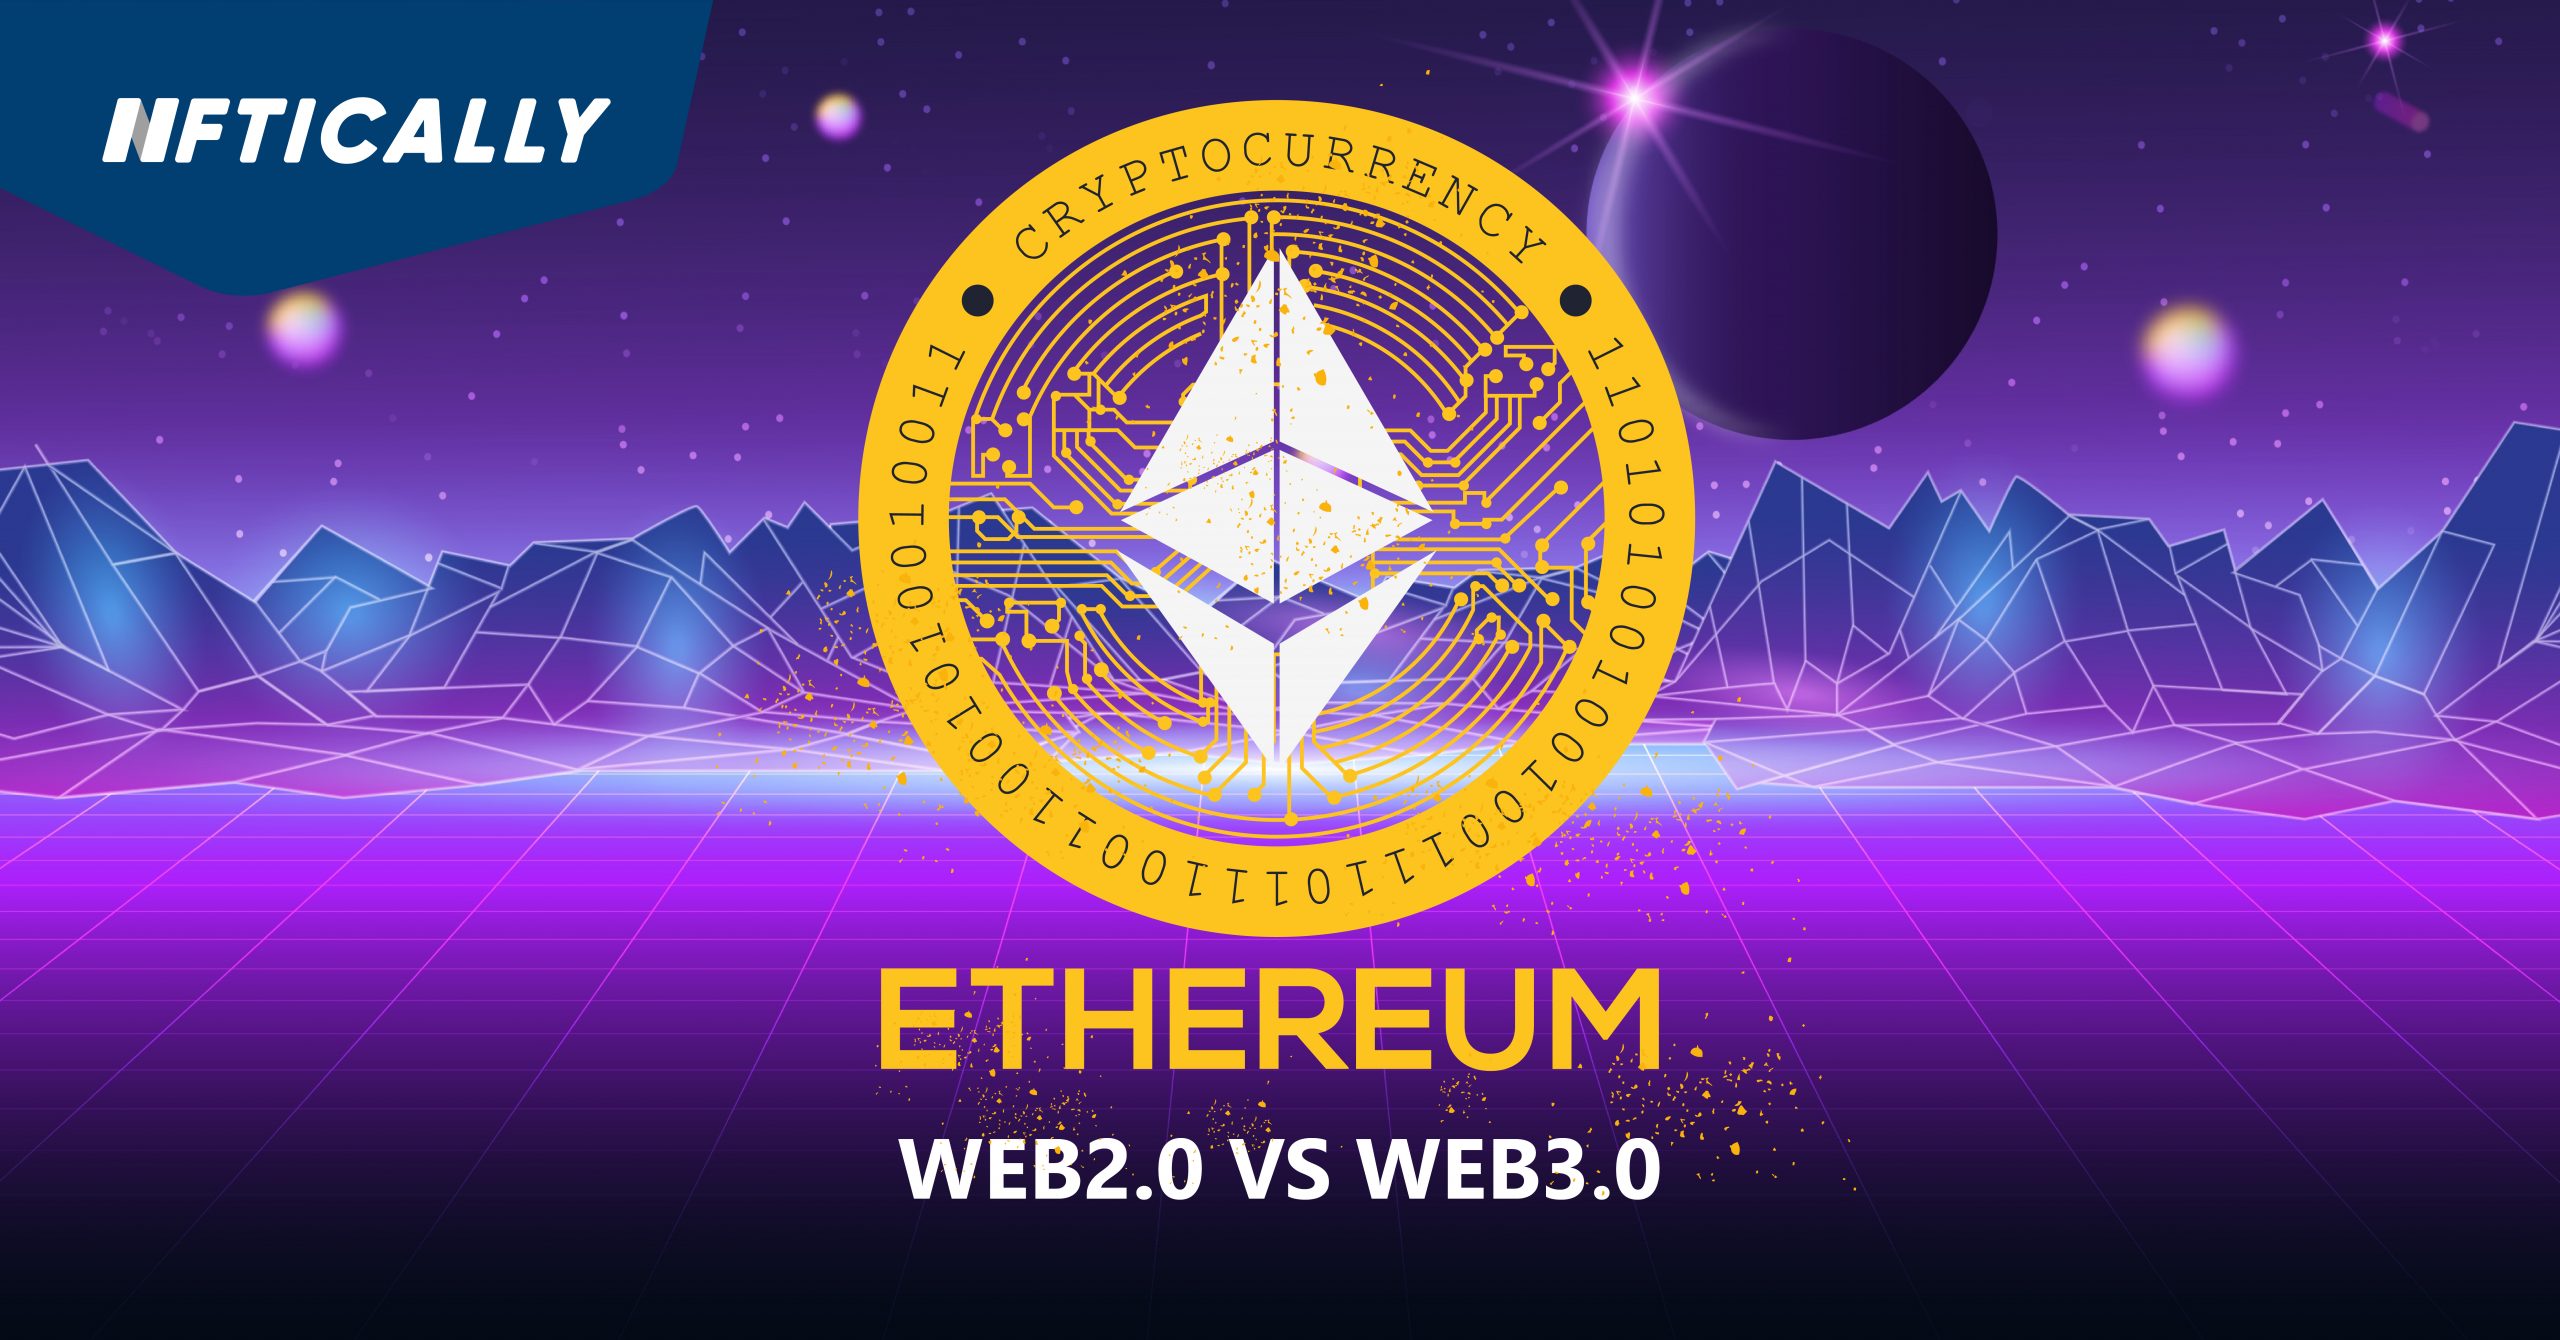 Web 2 vs Web 3 According To Ethereum